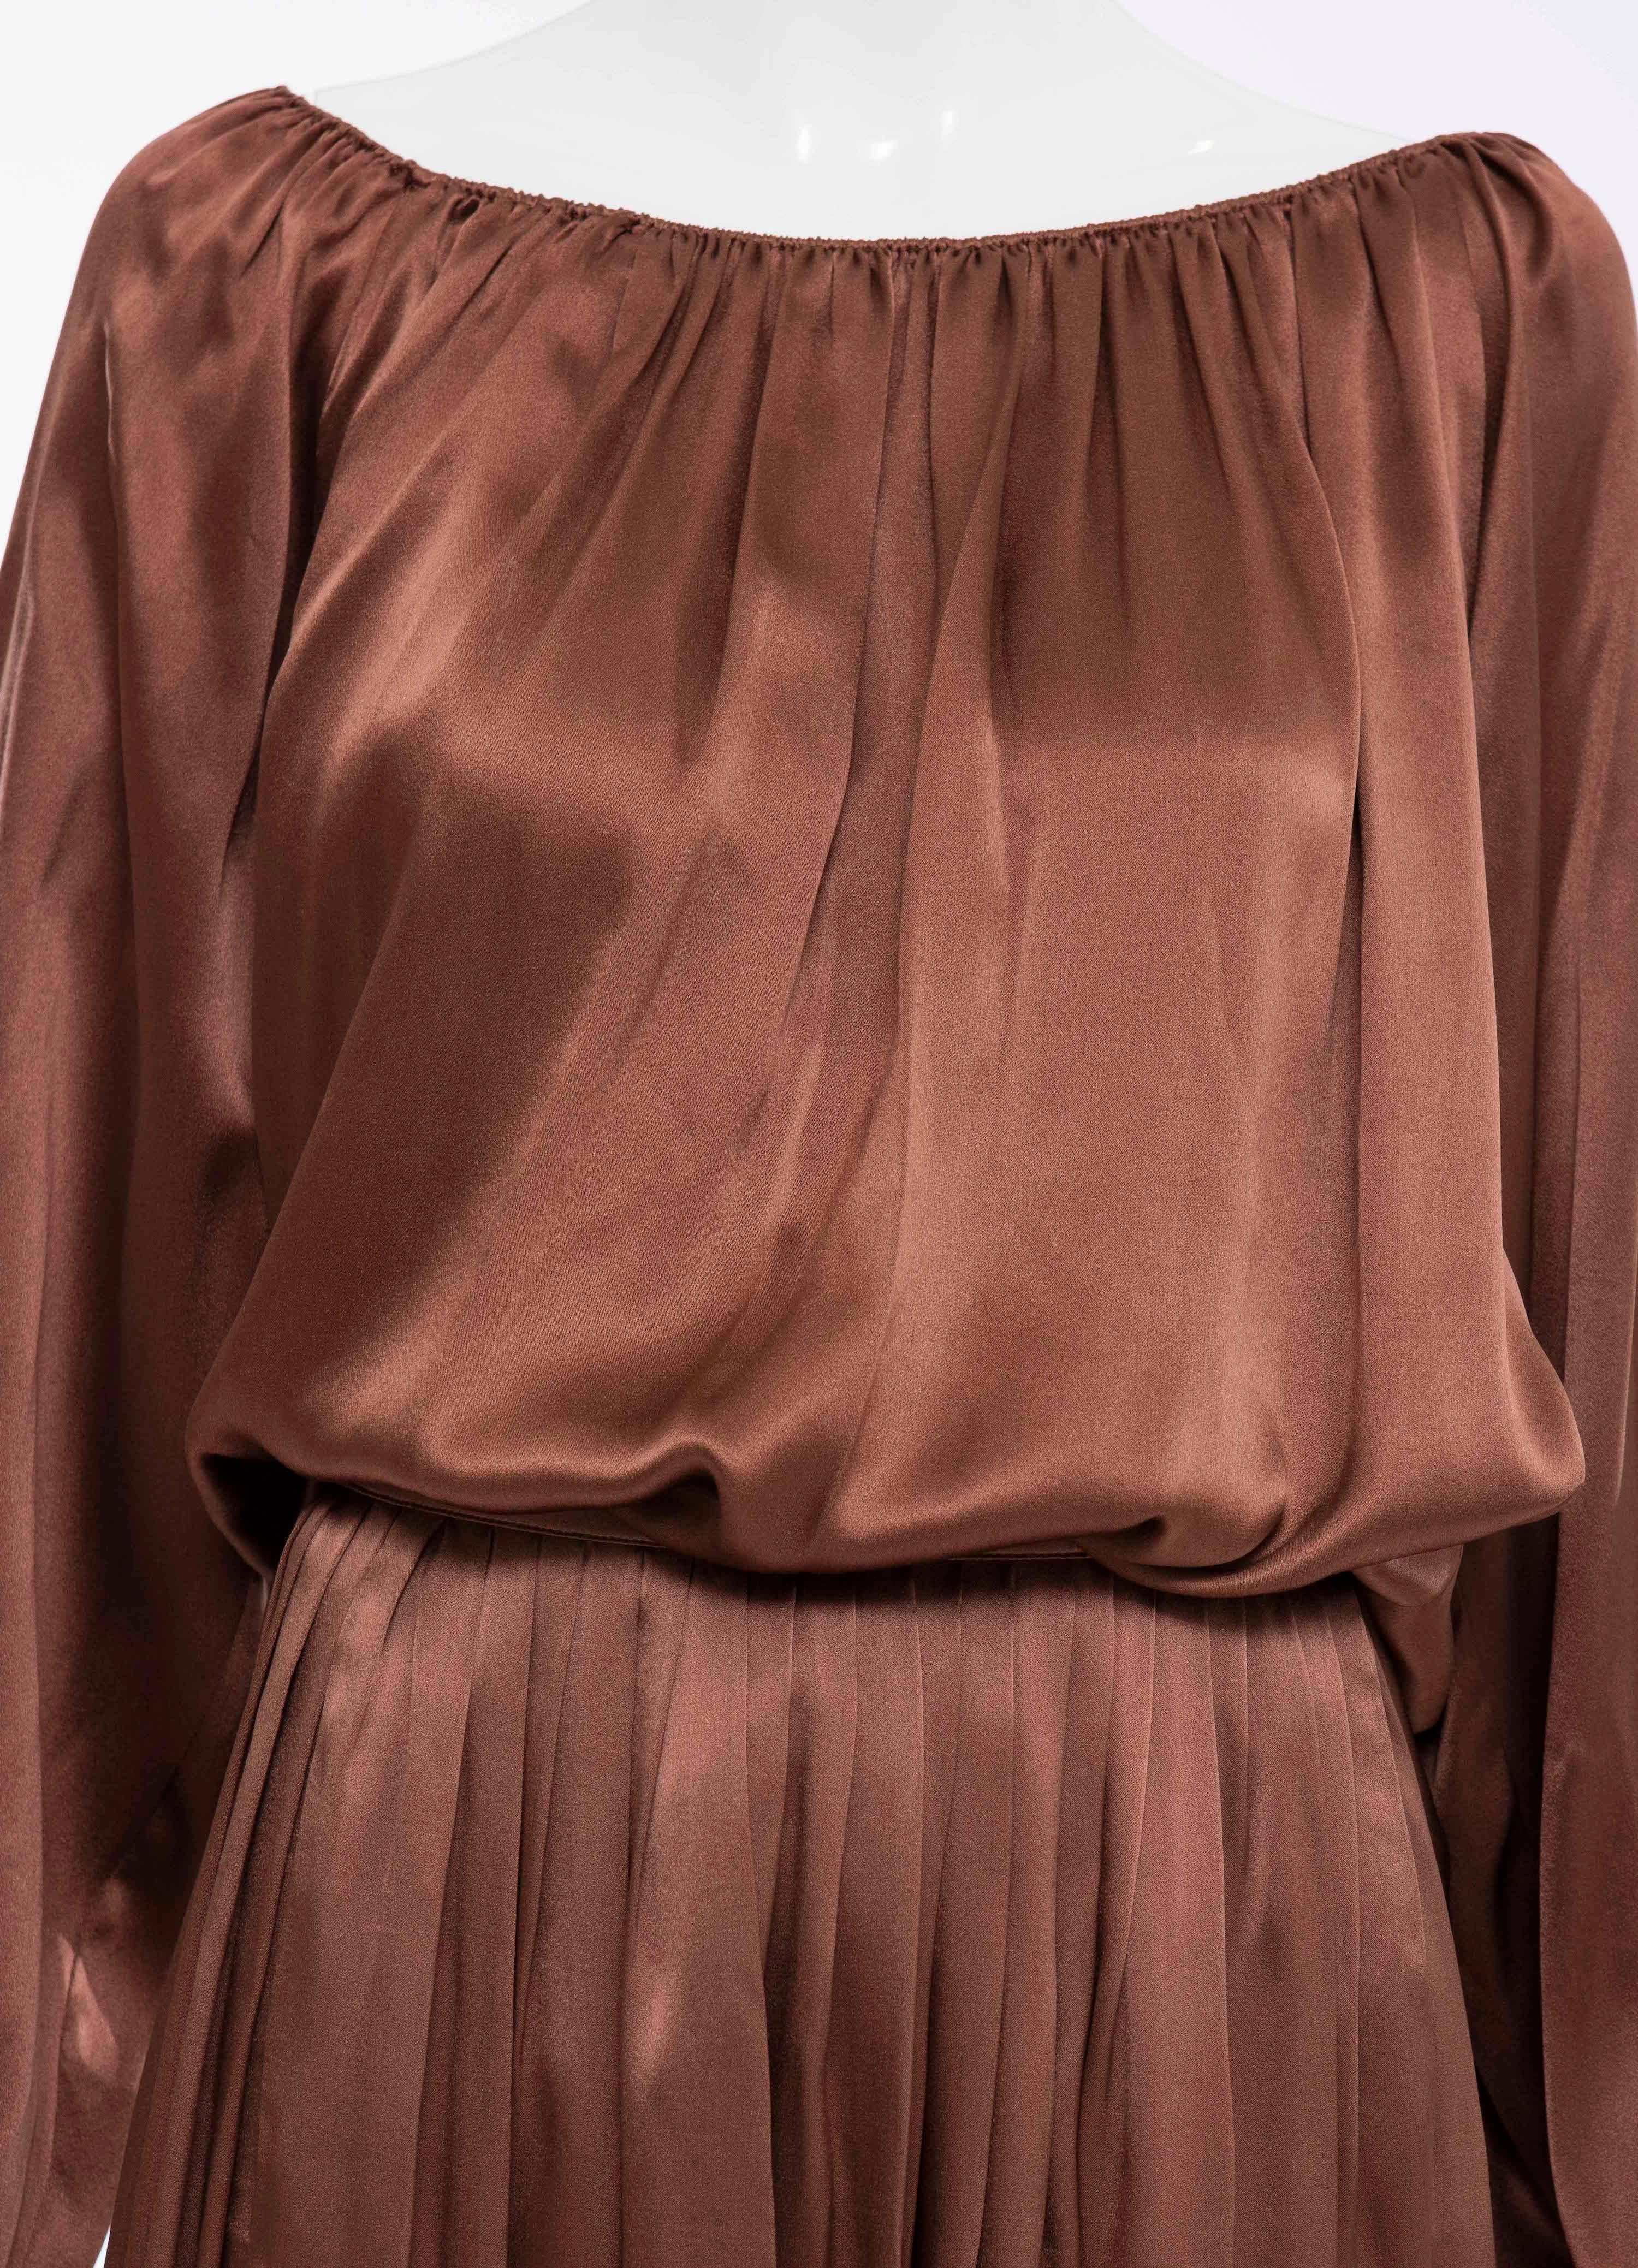 Calvin Klein Chocolate Brown Silk Charmeuse Skirt Suit, Circa 1970's For Sale 1